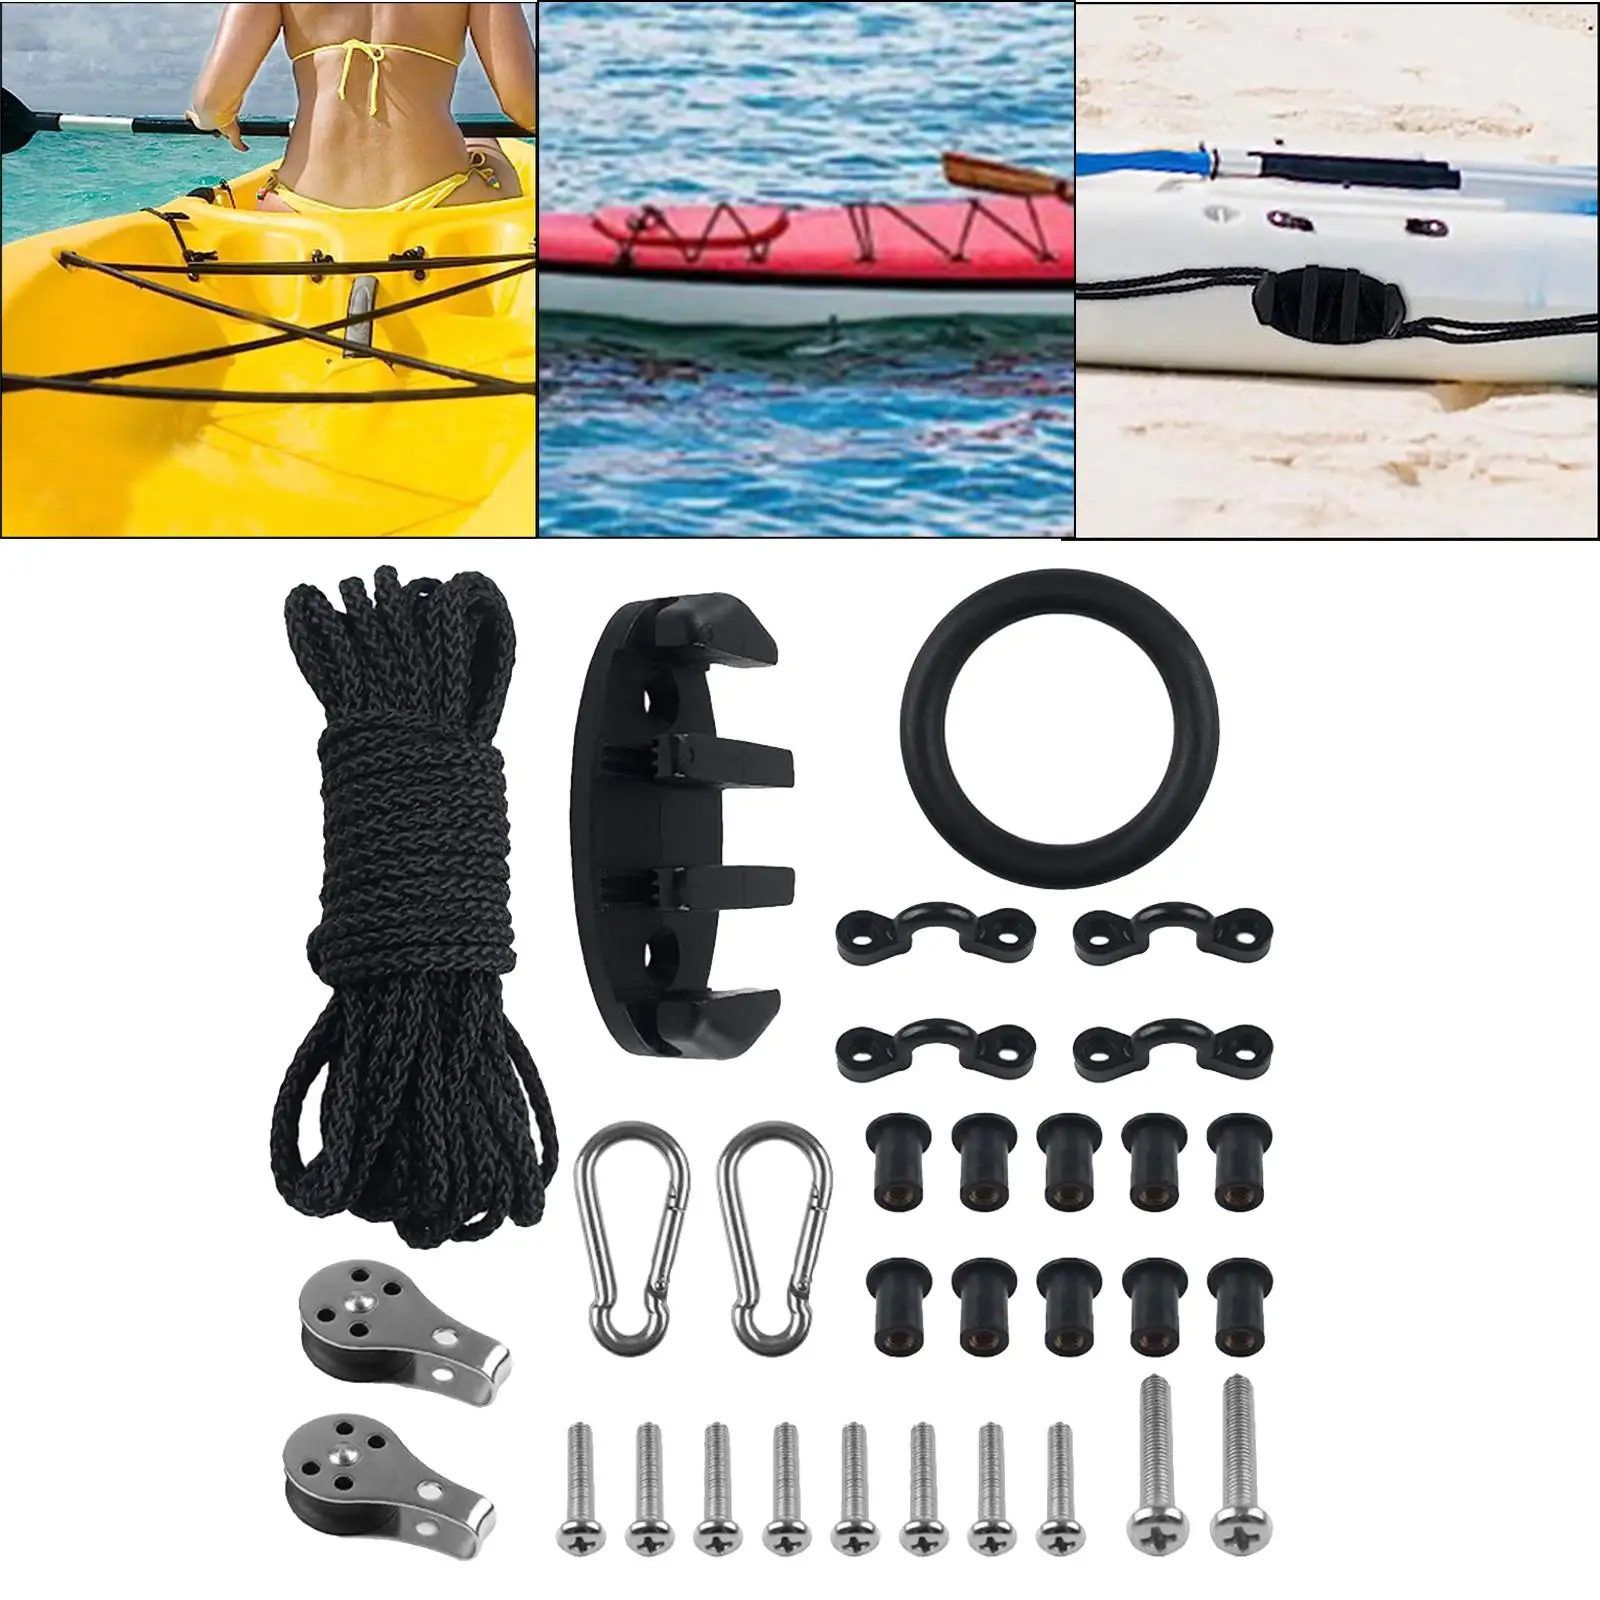 3Pcs Elastic Bungee Shock Cord Kayak Deck Rigging Kit for Outdoor Activities